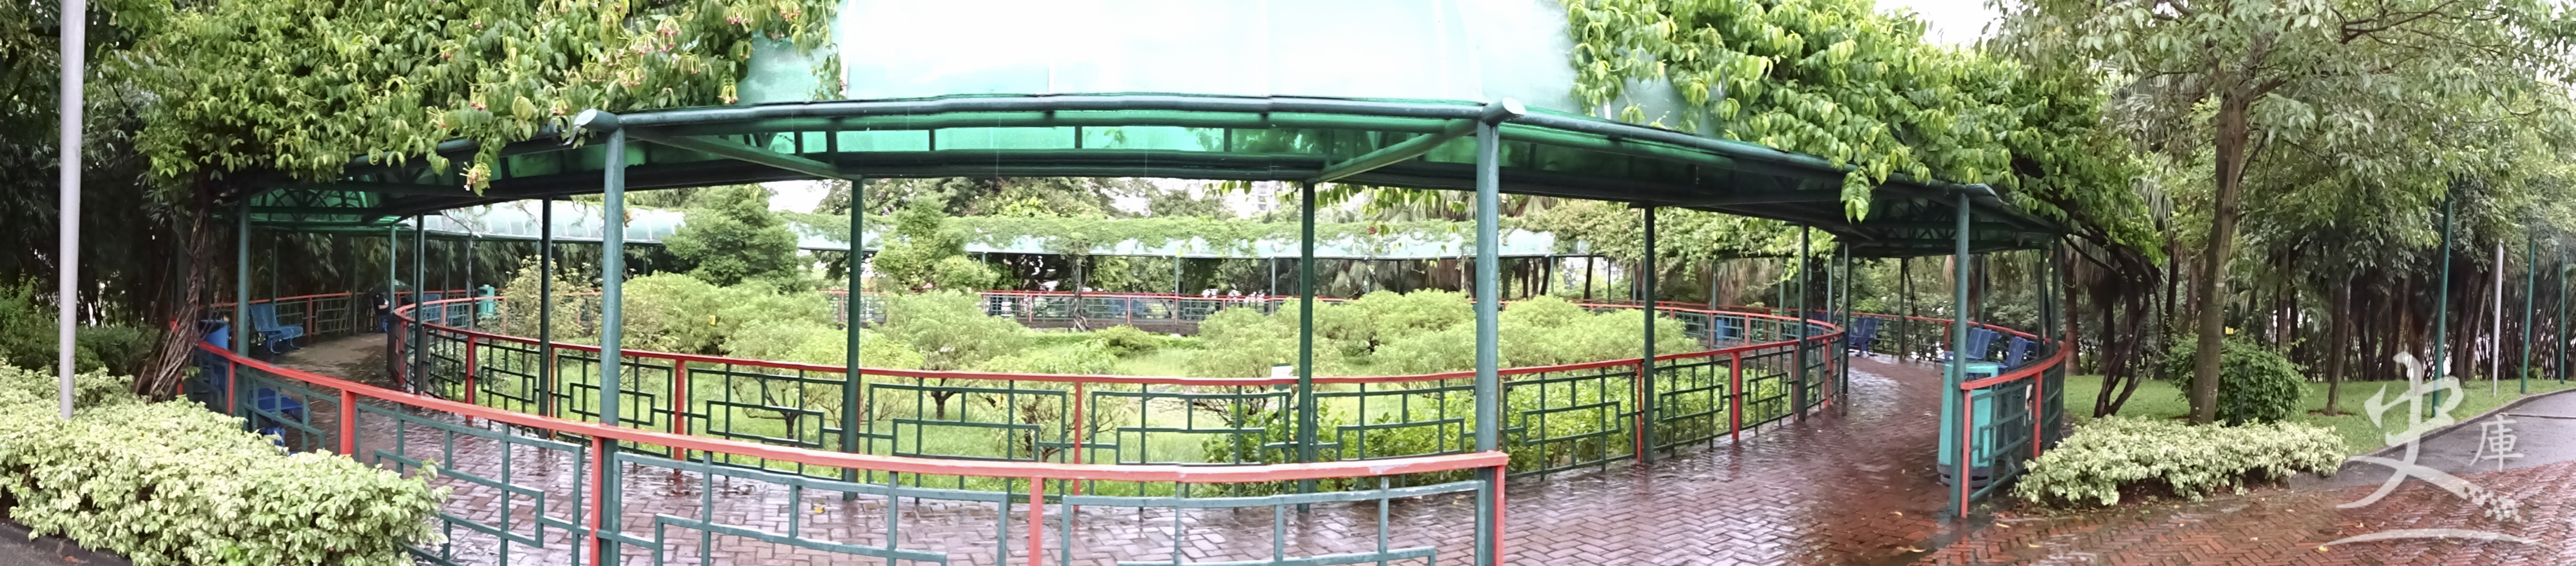 Dr. Sun Yat Sen Municipal Park (Macau)